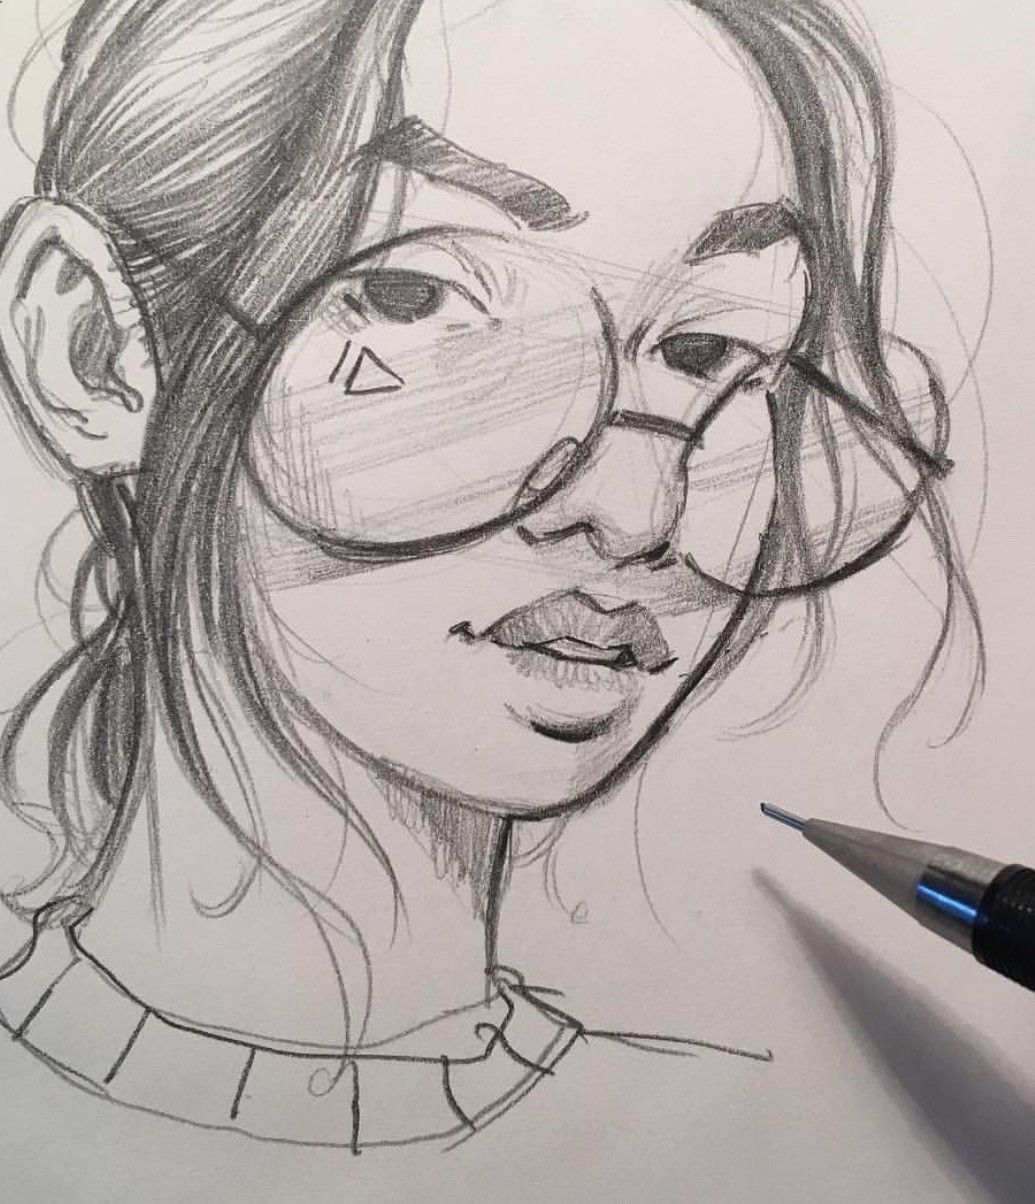 Рисунок девушки простым карандашом. Рисунки карандашом. Красивые рисунки карандашом. Скетчи карандашом. Красивые арты карандашом.